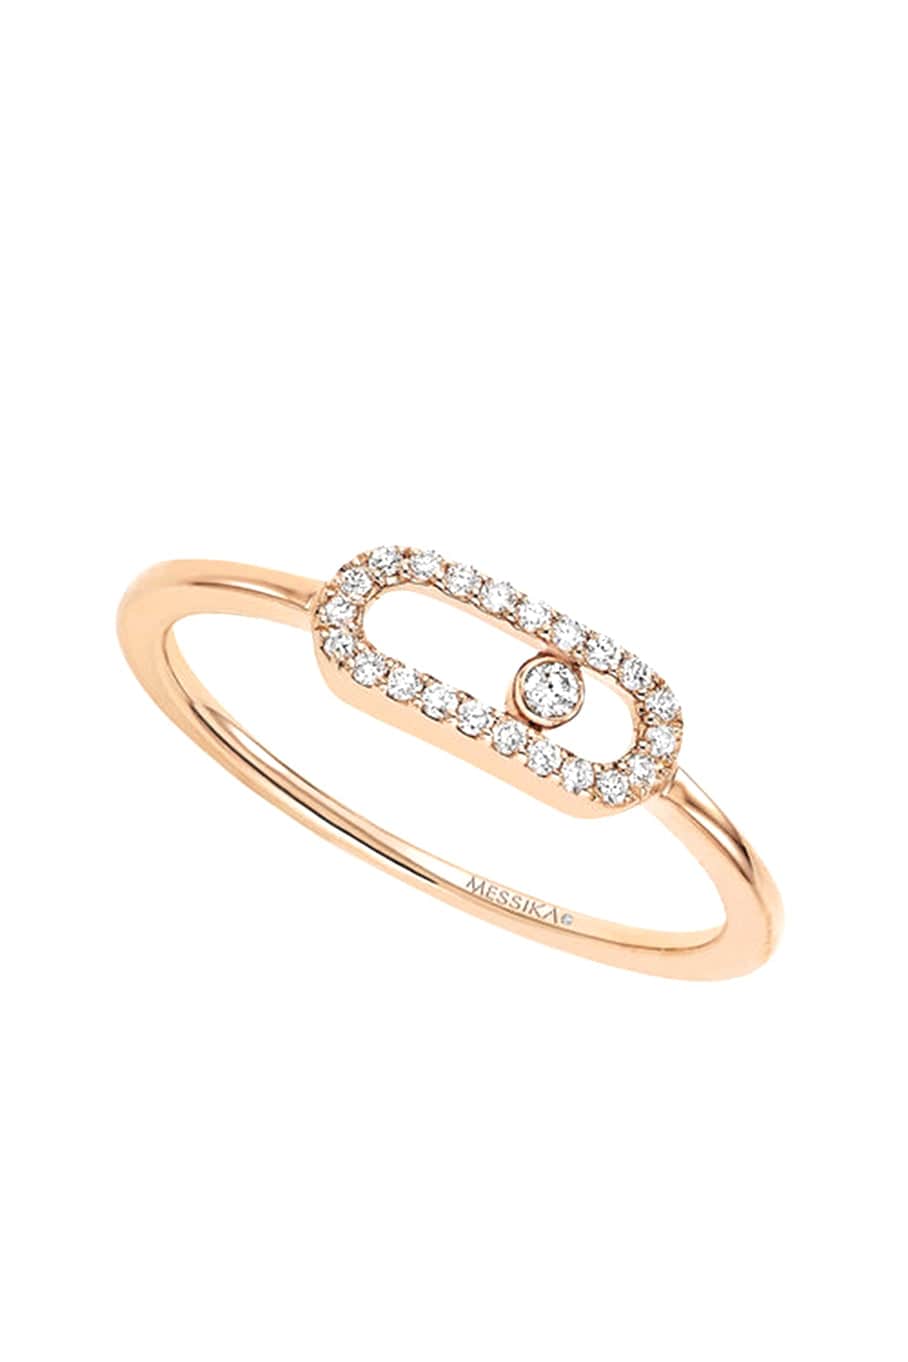 MESSIKA-Move Uno Diamond Ring-ROSE GOLD